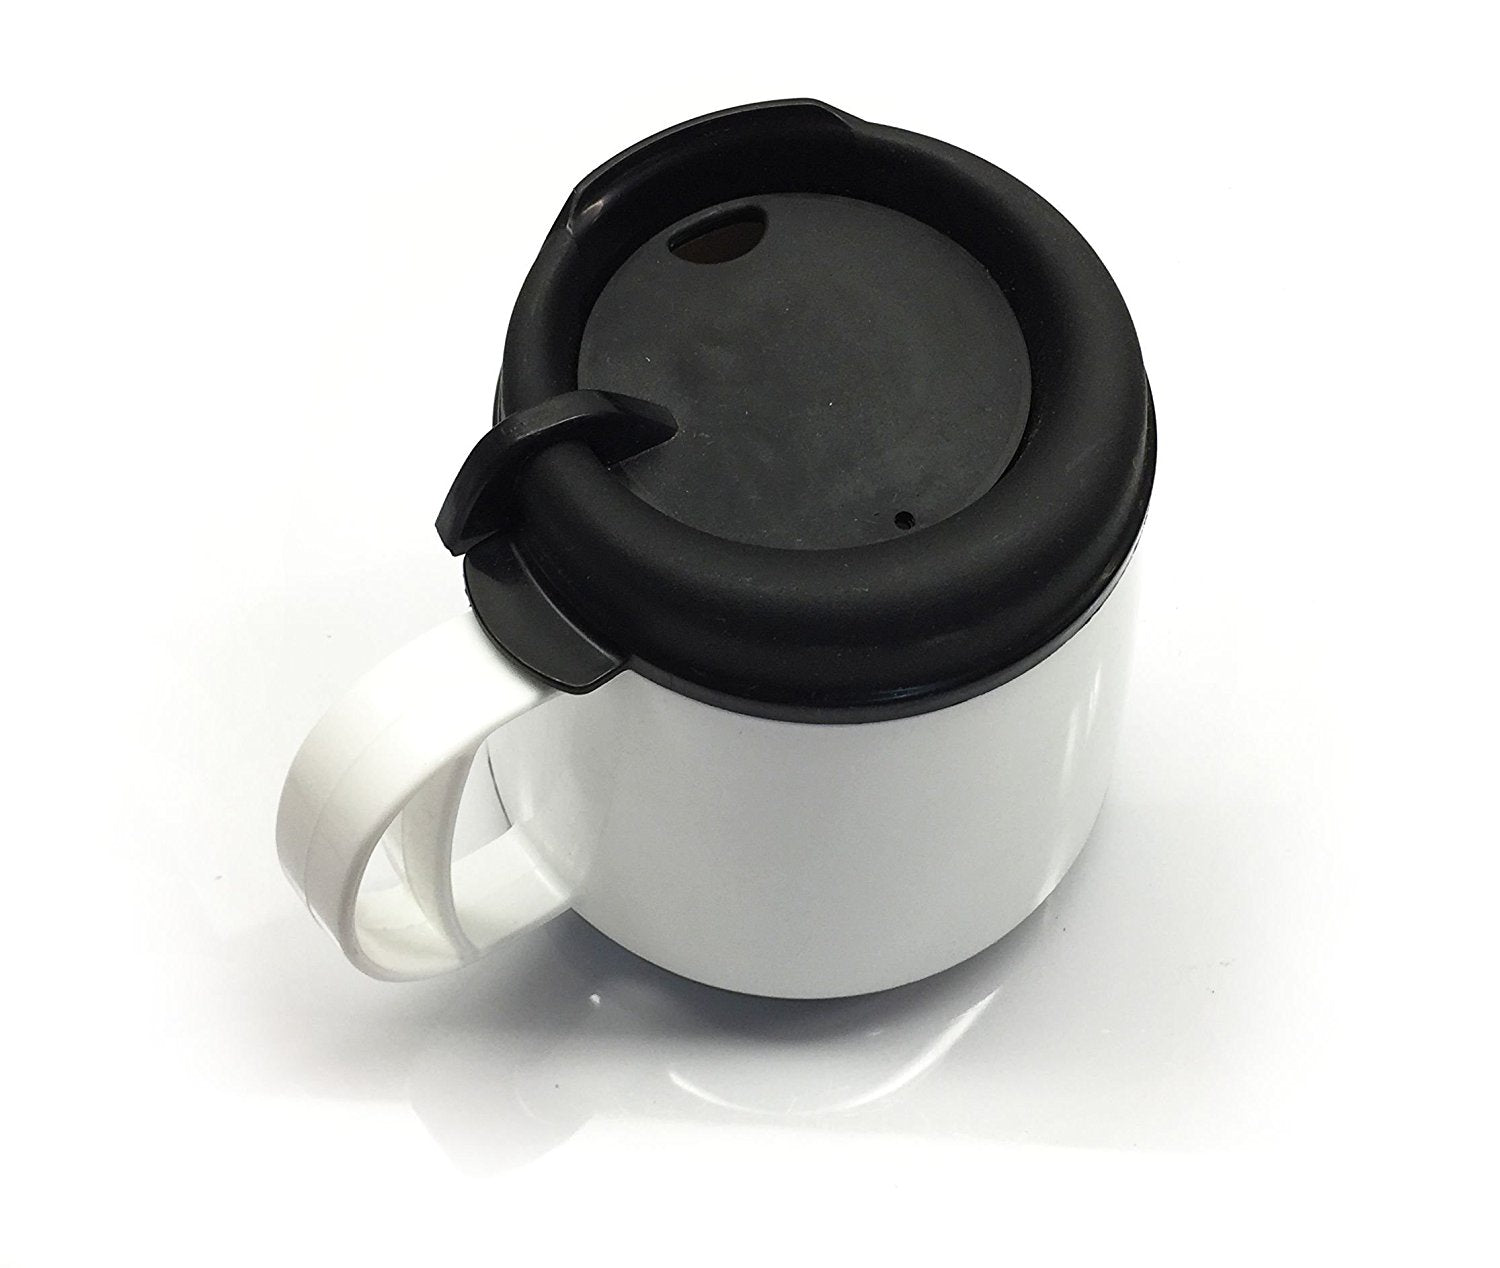 2 Foam Insulated 20 oz. Thermo Serv Travel Coffee Mugs